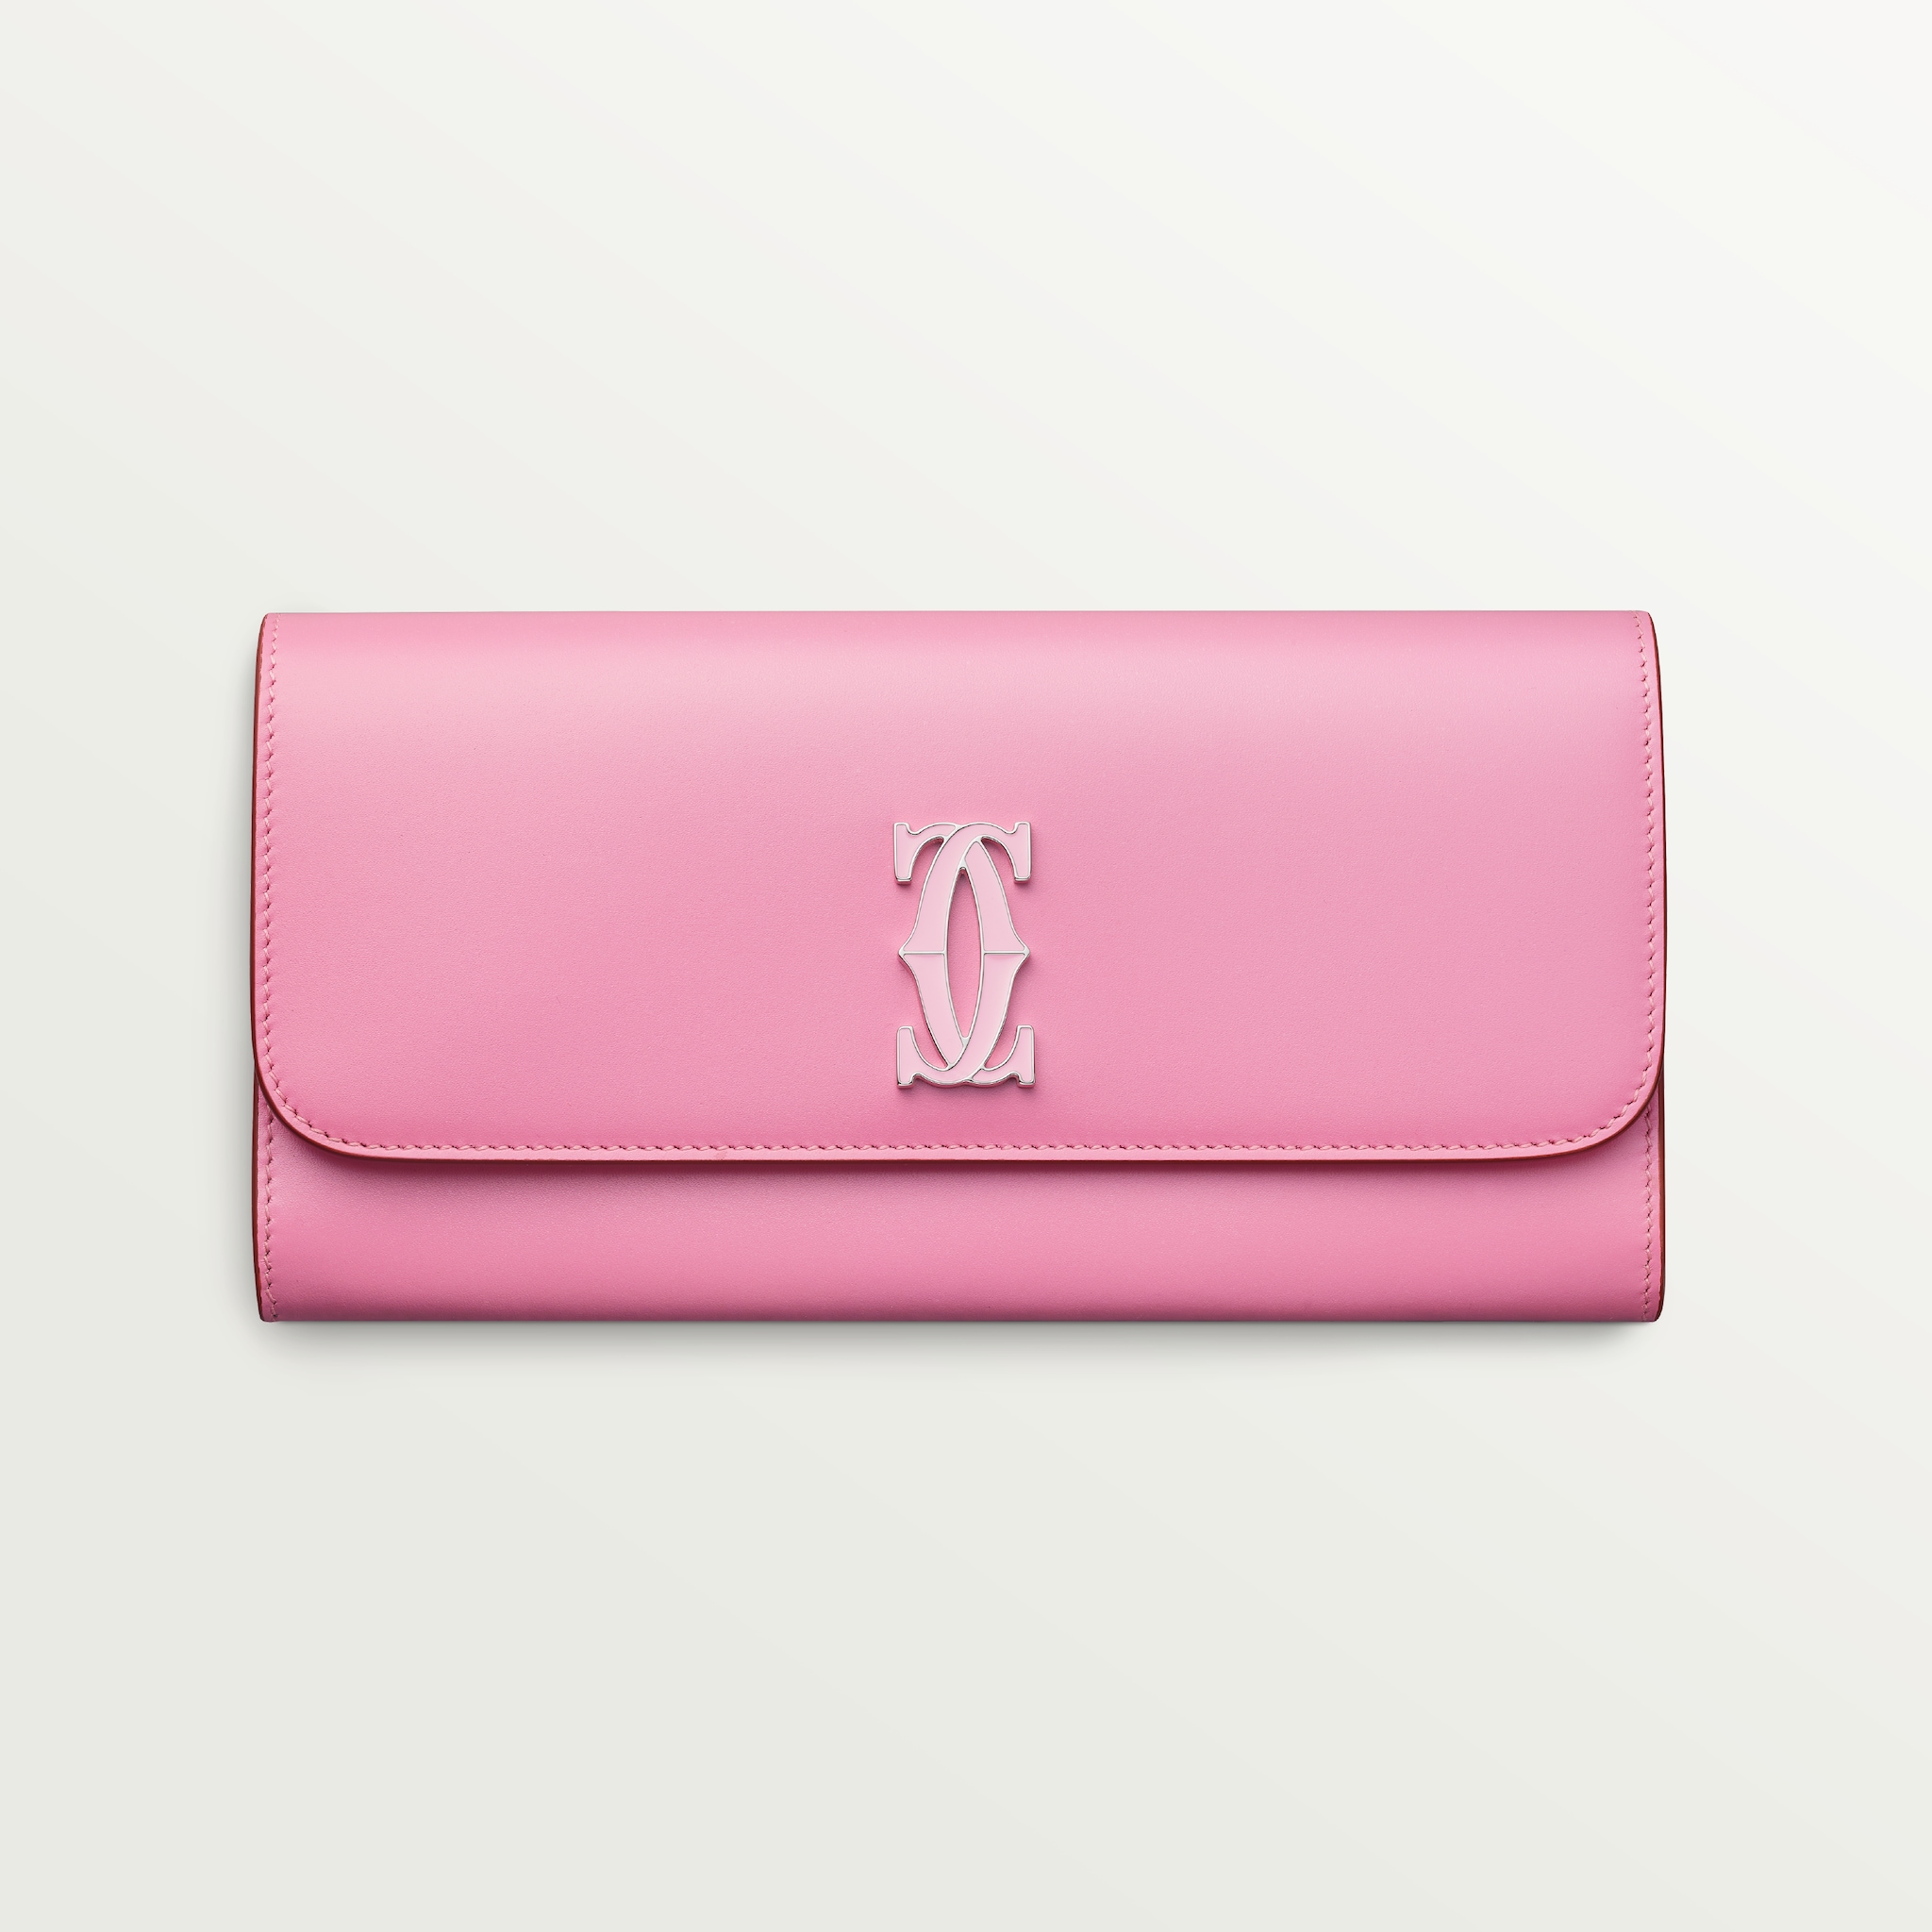 International wallet with flap, C de CartierTwo-tone pink/pale pink calfskin, palladium and pale pink enamel finish